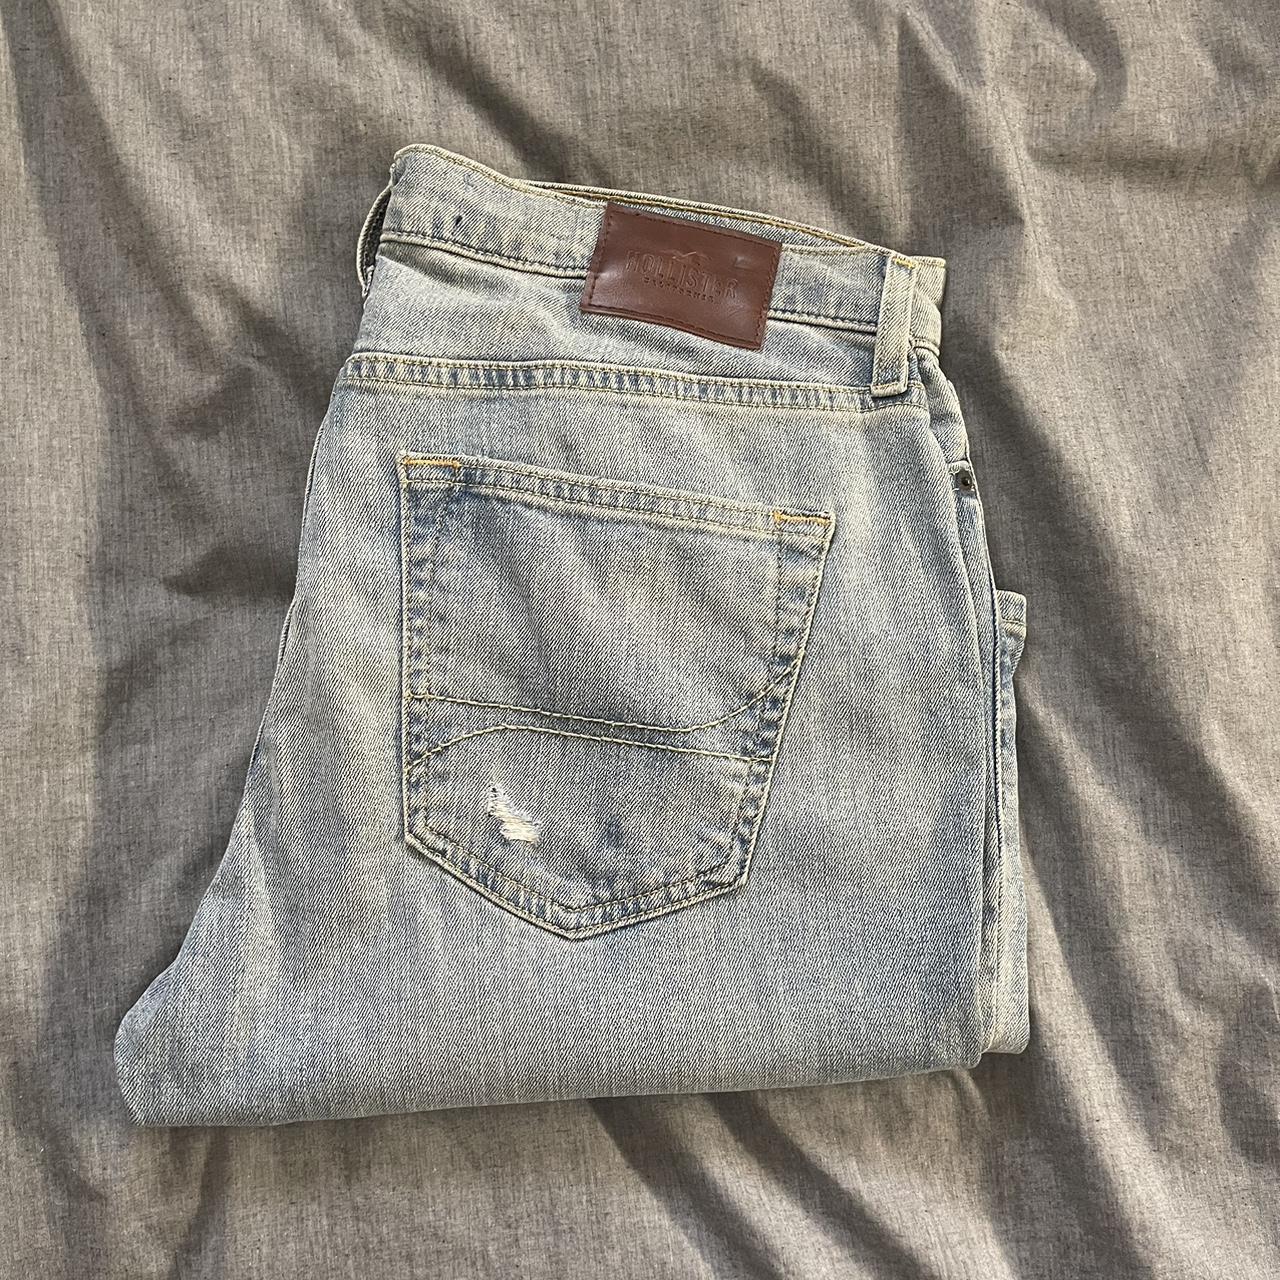 Distressed jeans - Depop